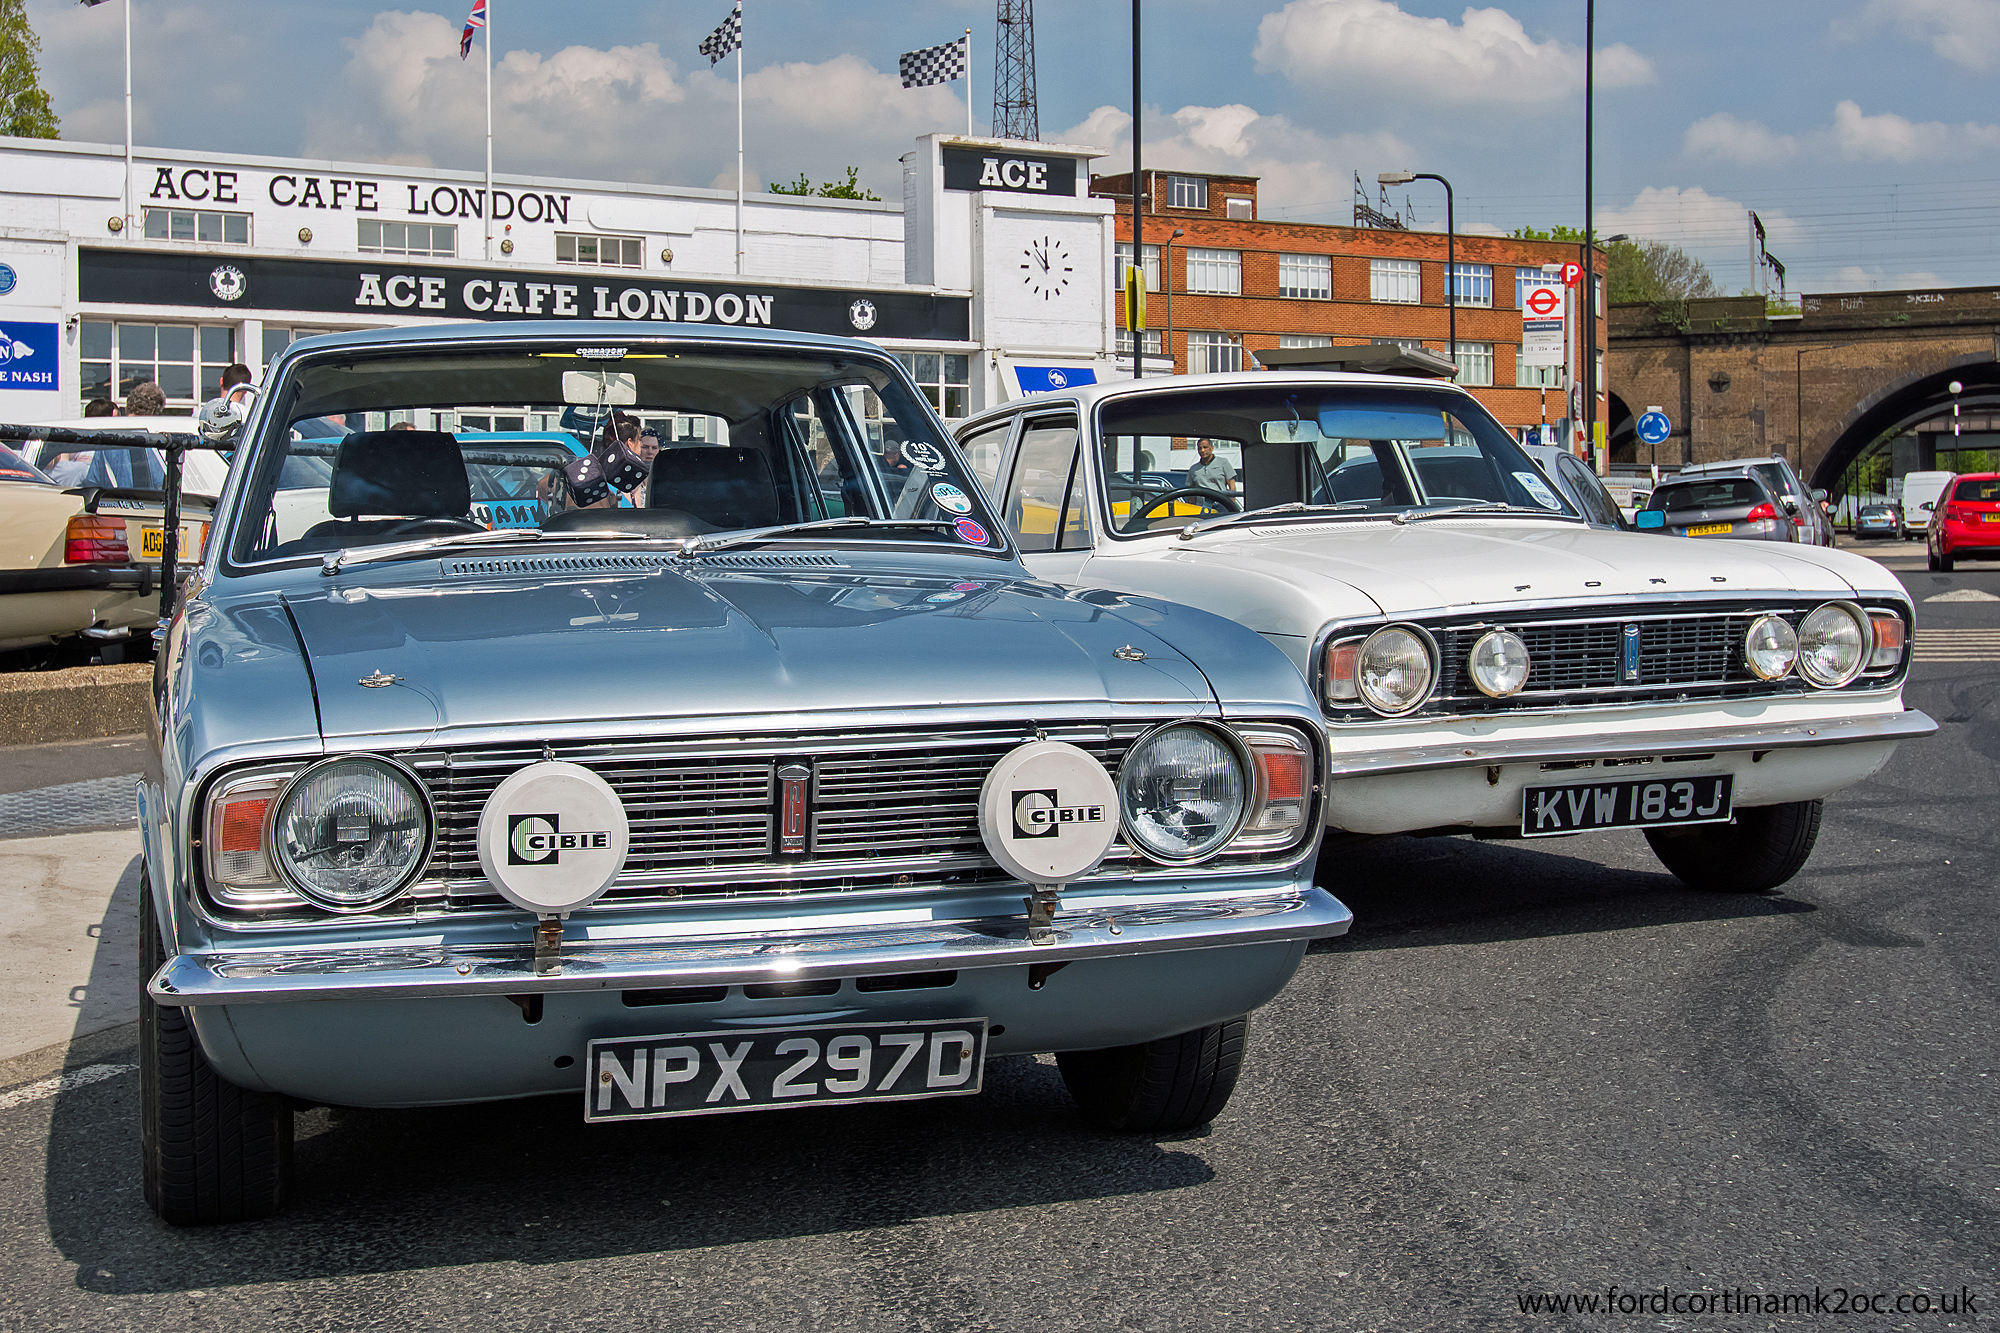 Cortinas at the Ace - Ford Cortina Mk2 Owners Club | Ford Cortina Mk2 ...